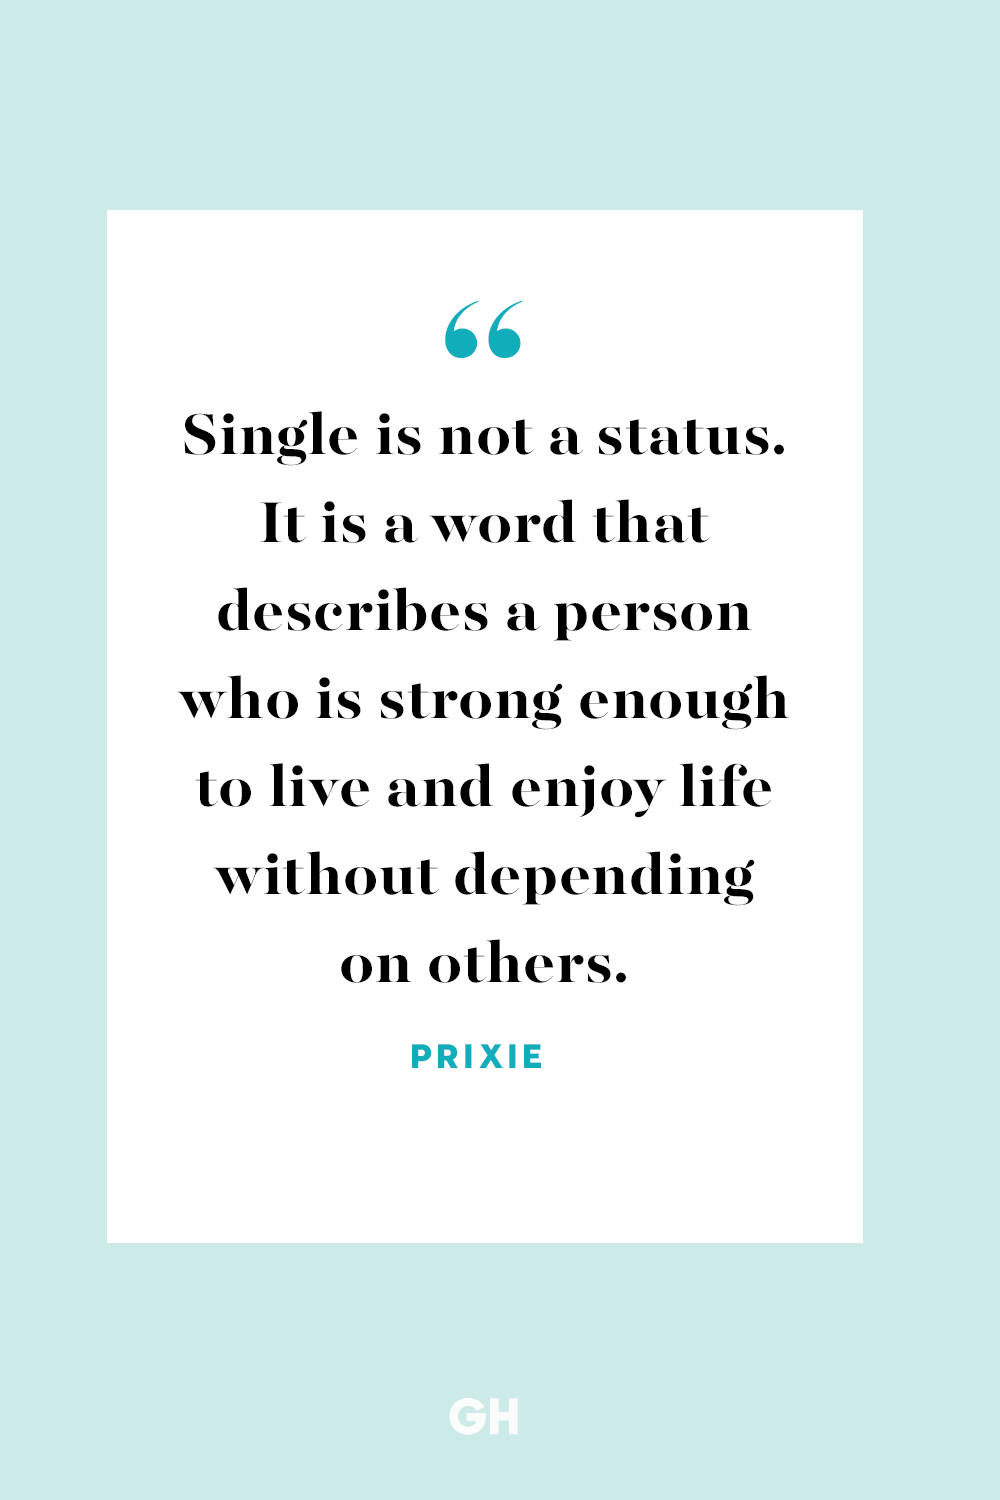 single life quotes